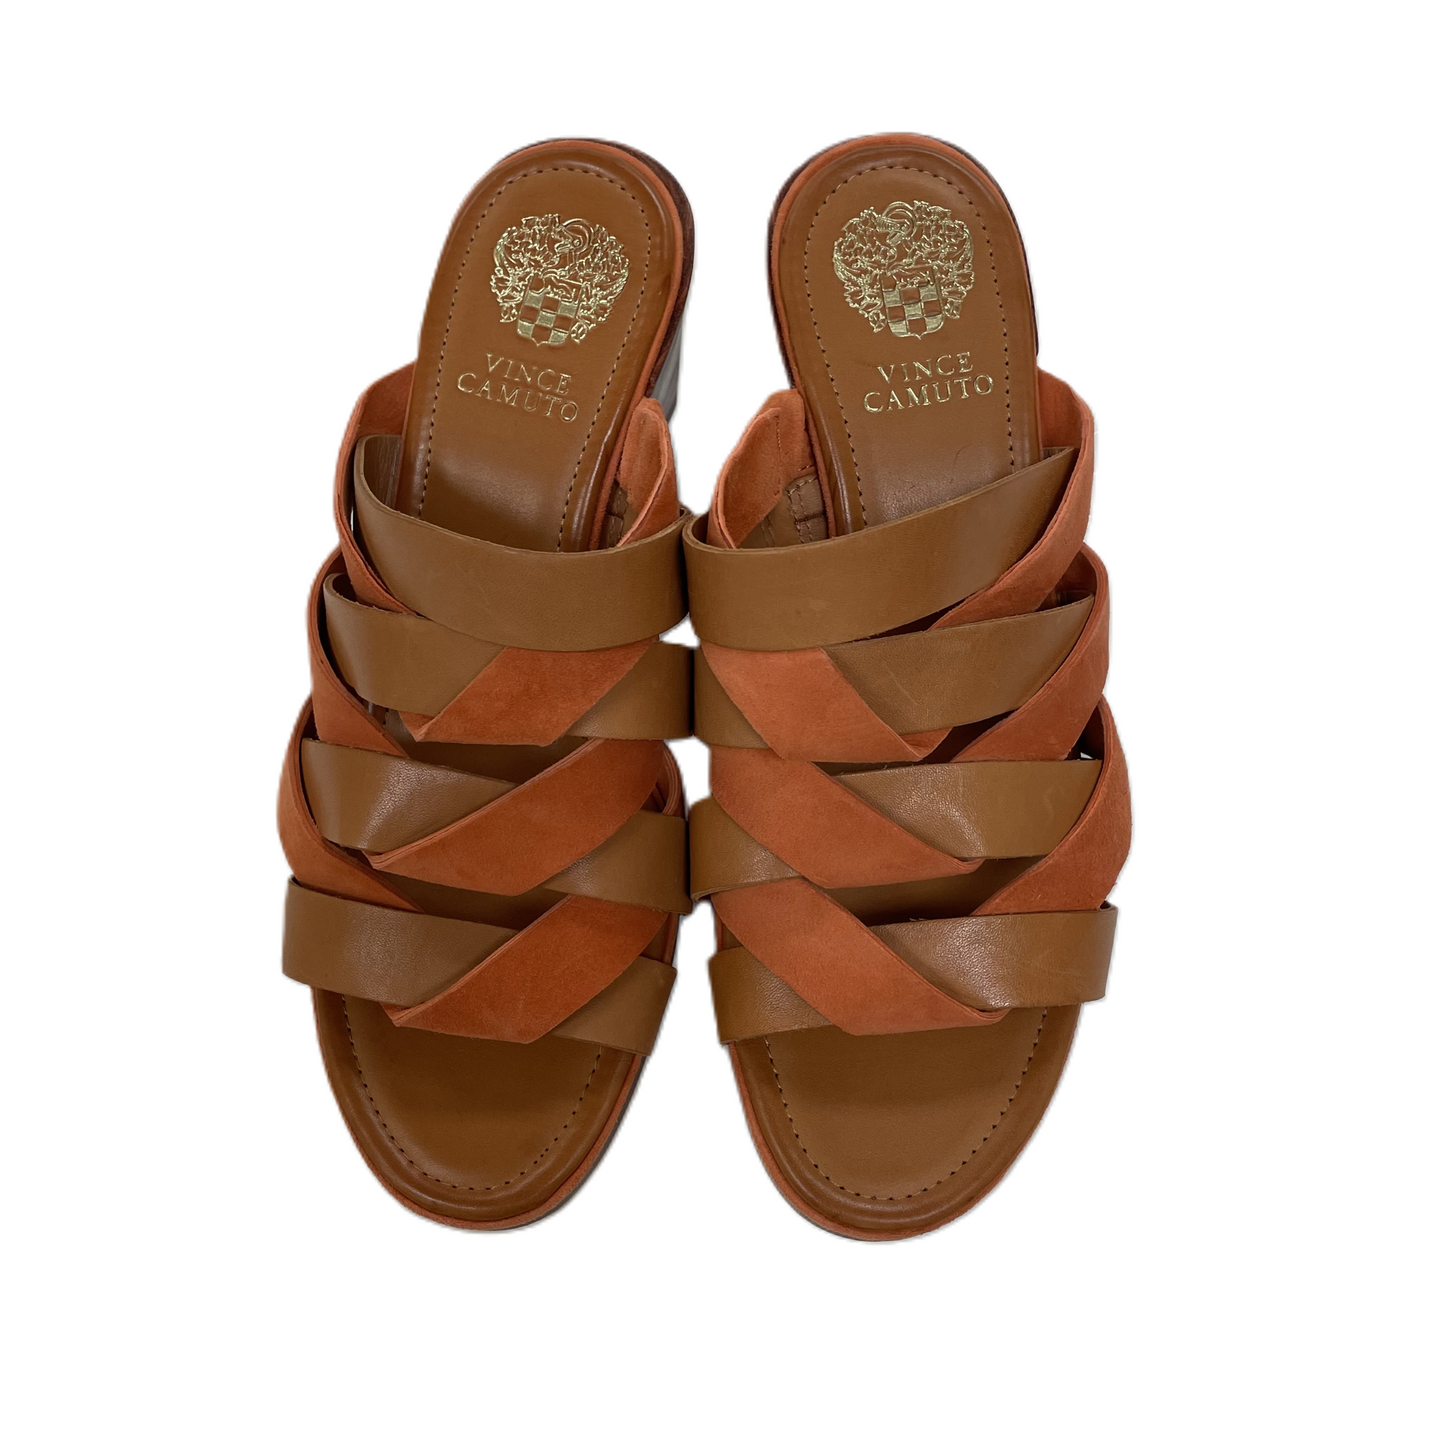 Orange Sandals Heels Block By Vince Camuto, Size: 7.5